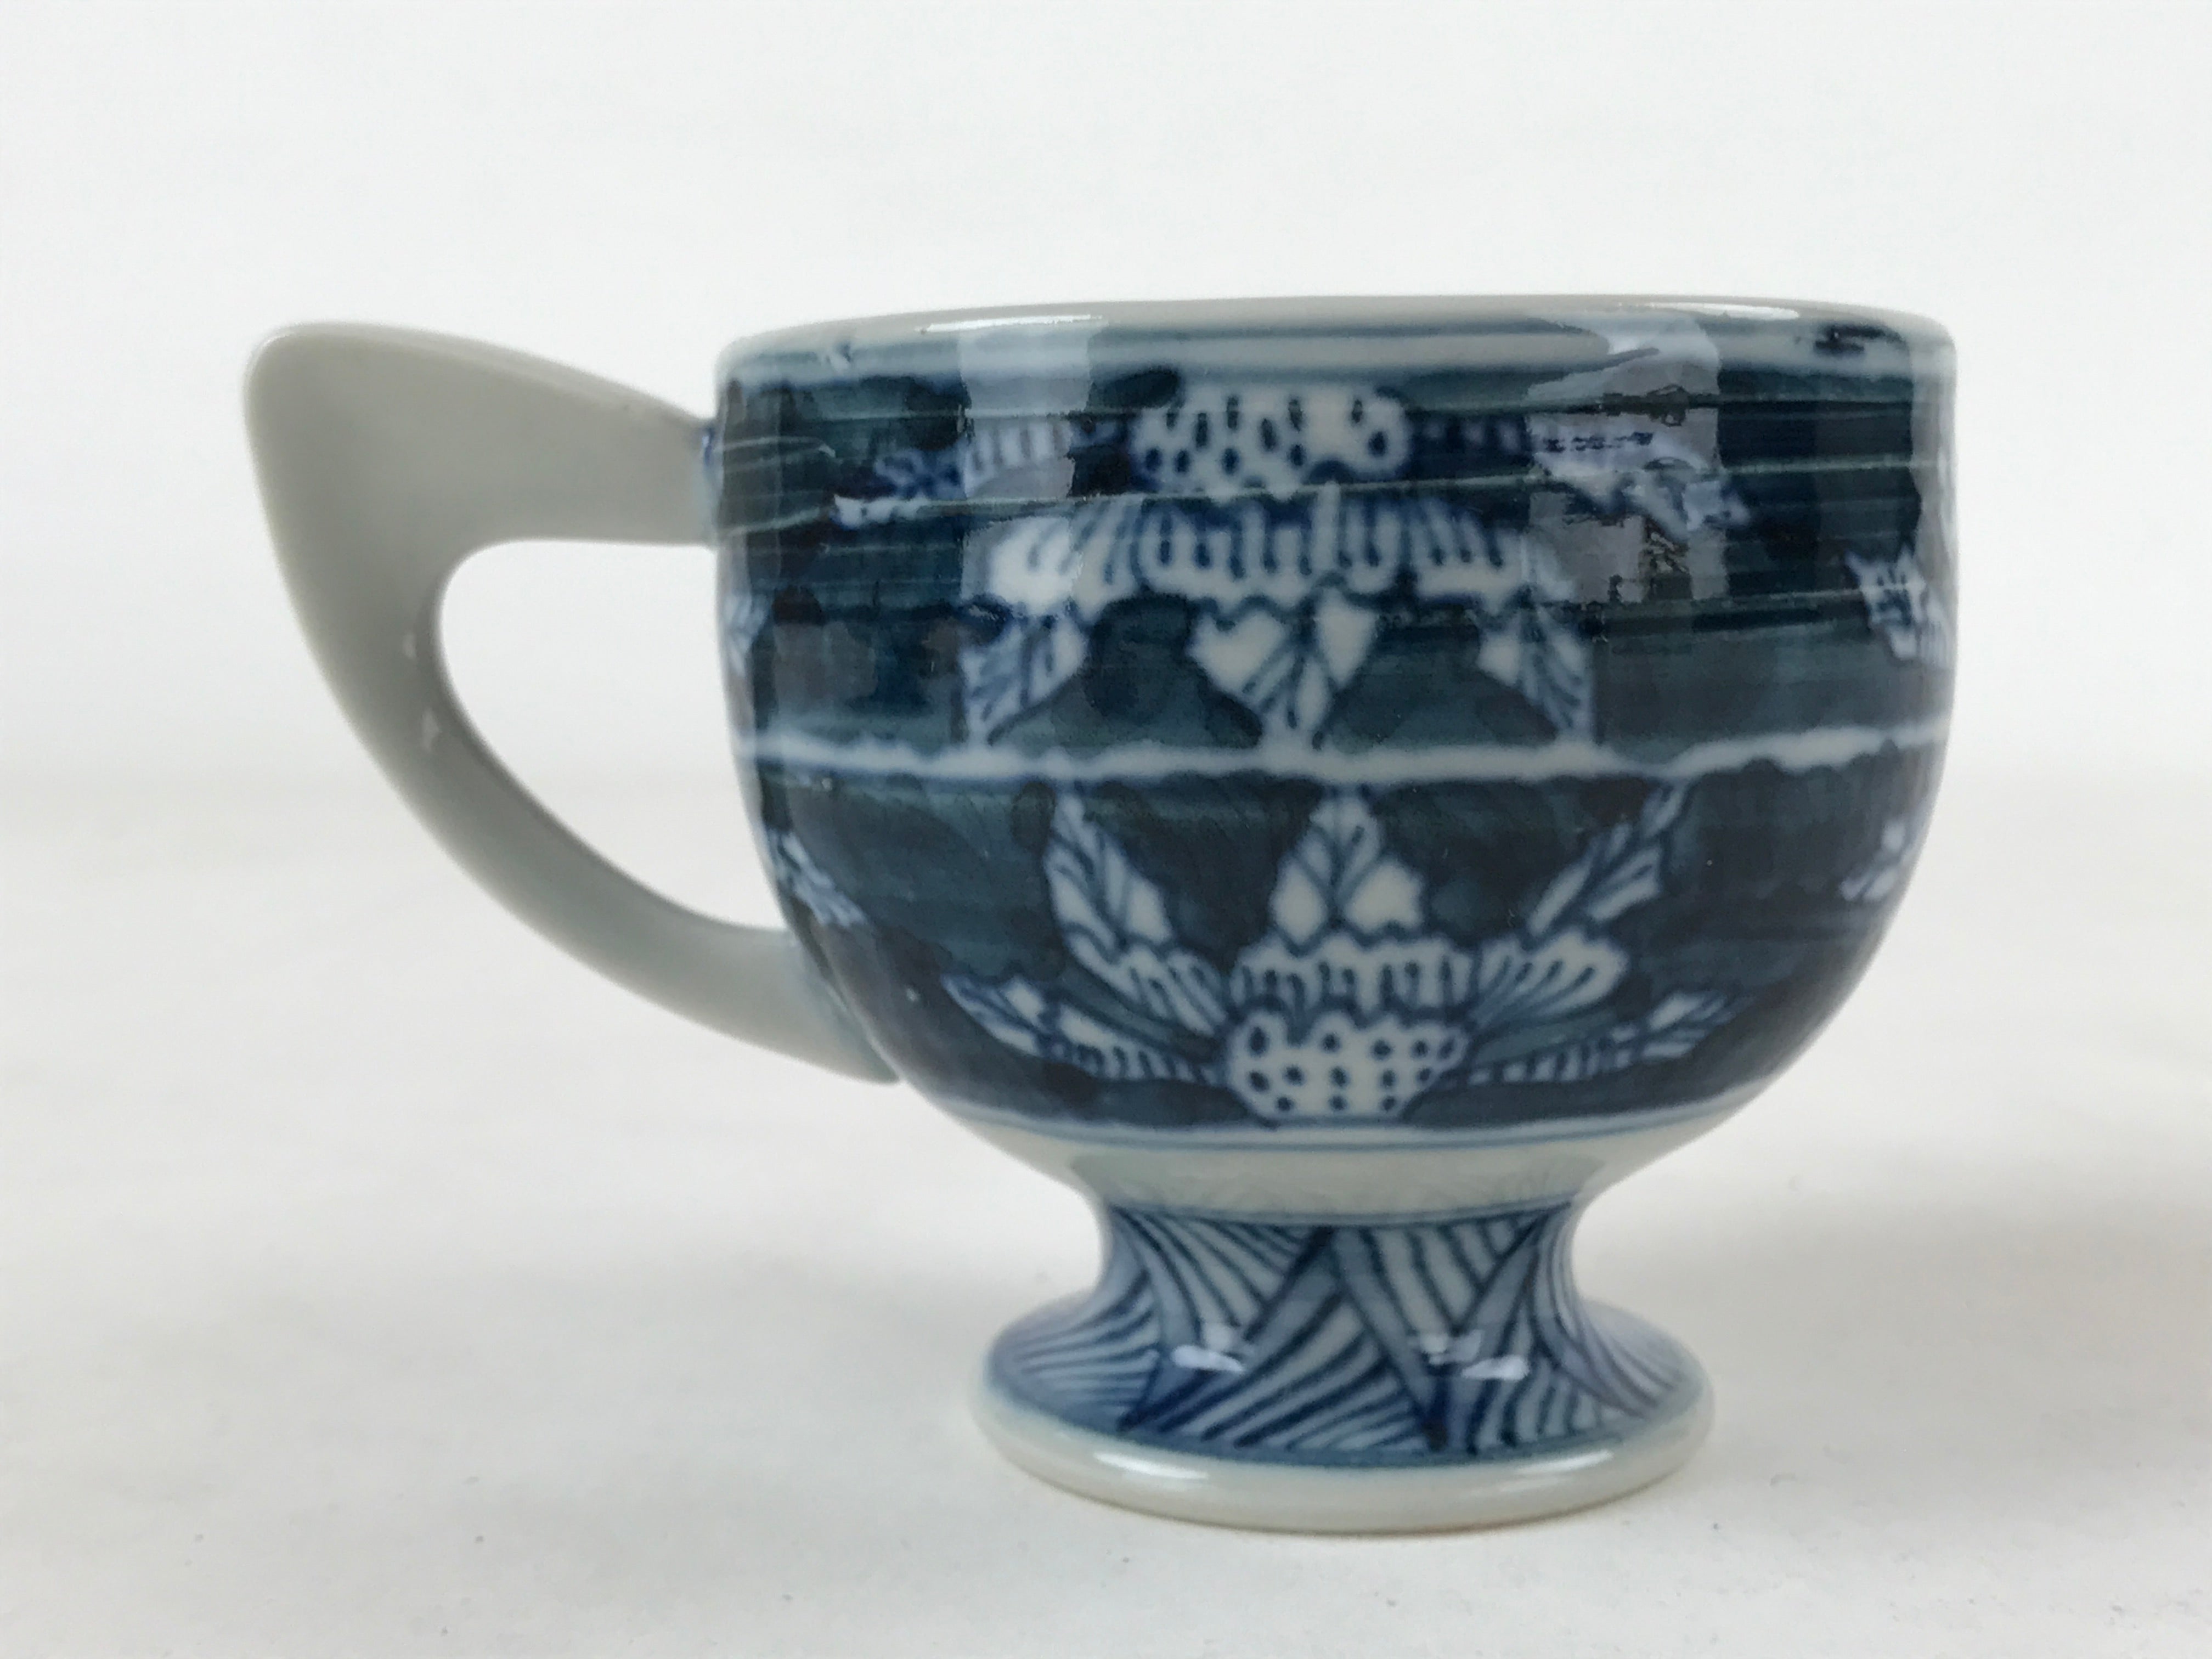 Japanese Ceramic Sometsuke Teacup And Saucer Vtg Pottery White Blue Floral PY590